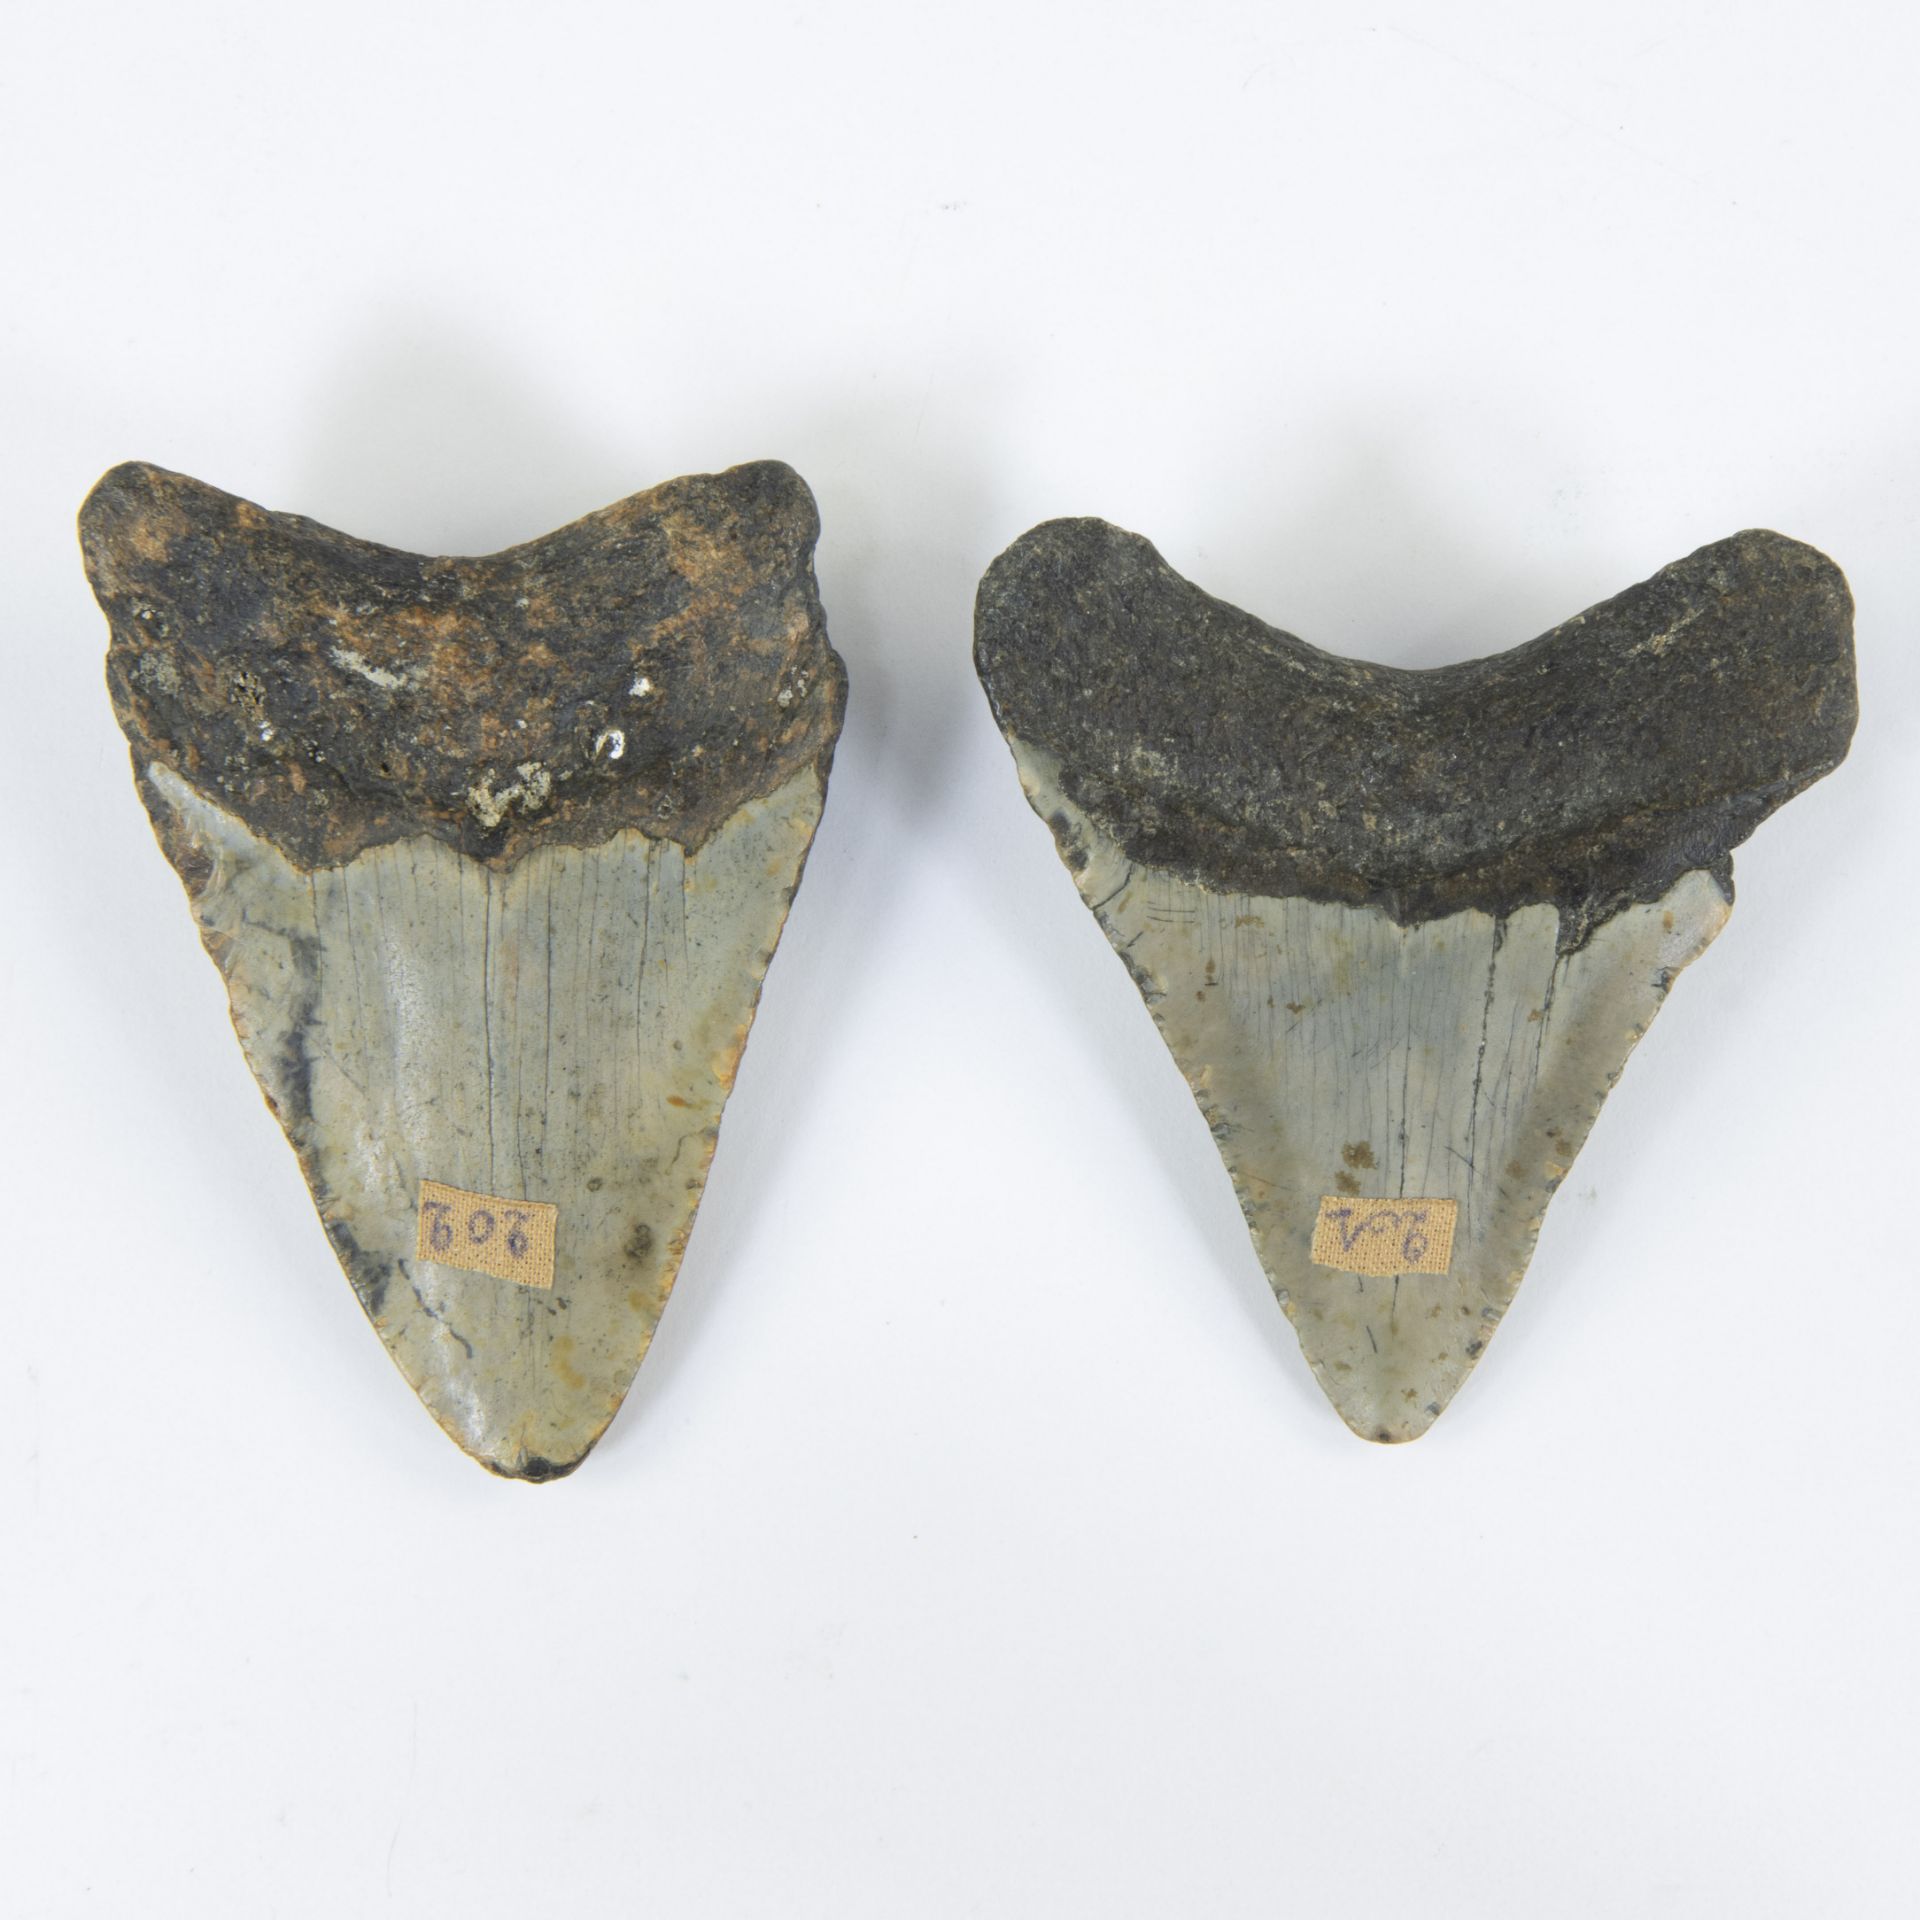 2 shark teeth from Kieldrecht - Kallo during deepening of Berendrecht dock - Bild 2 aus 2